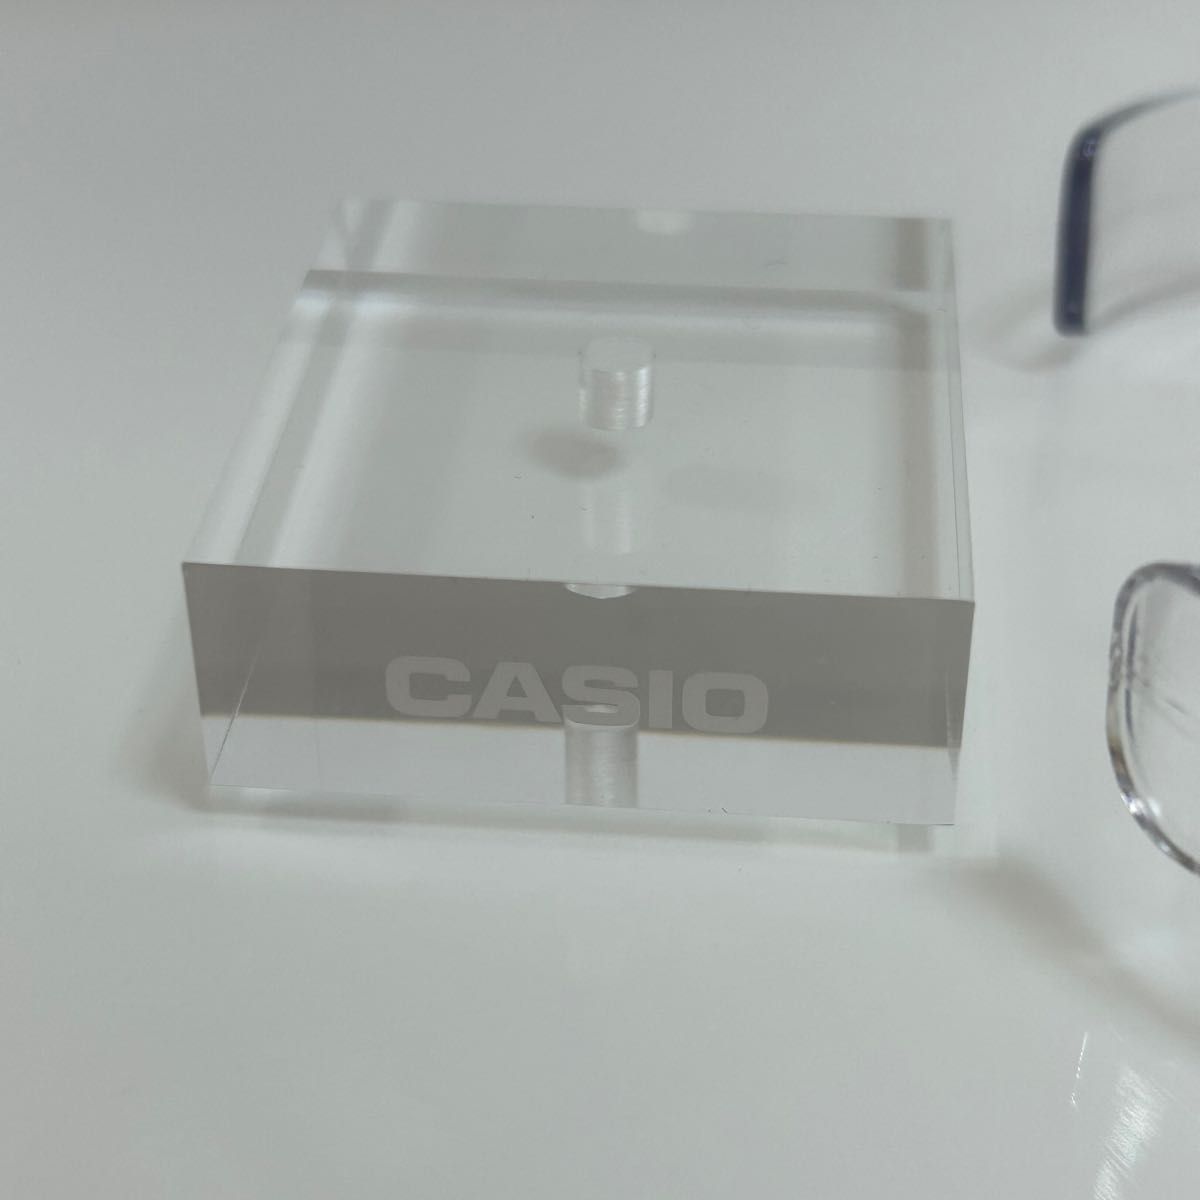 CASIO C-RINGスタンド 時計 腕時計 ウォッチスタンド 展示用 CASIOロゴ スタンド  ウォッチ ロゴ入り 時計